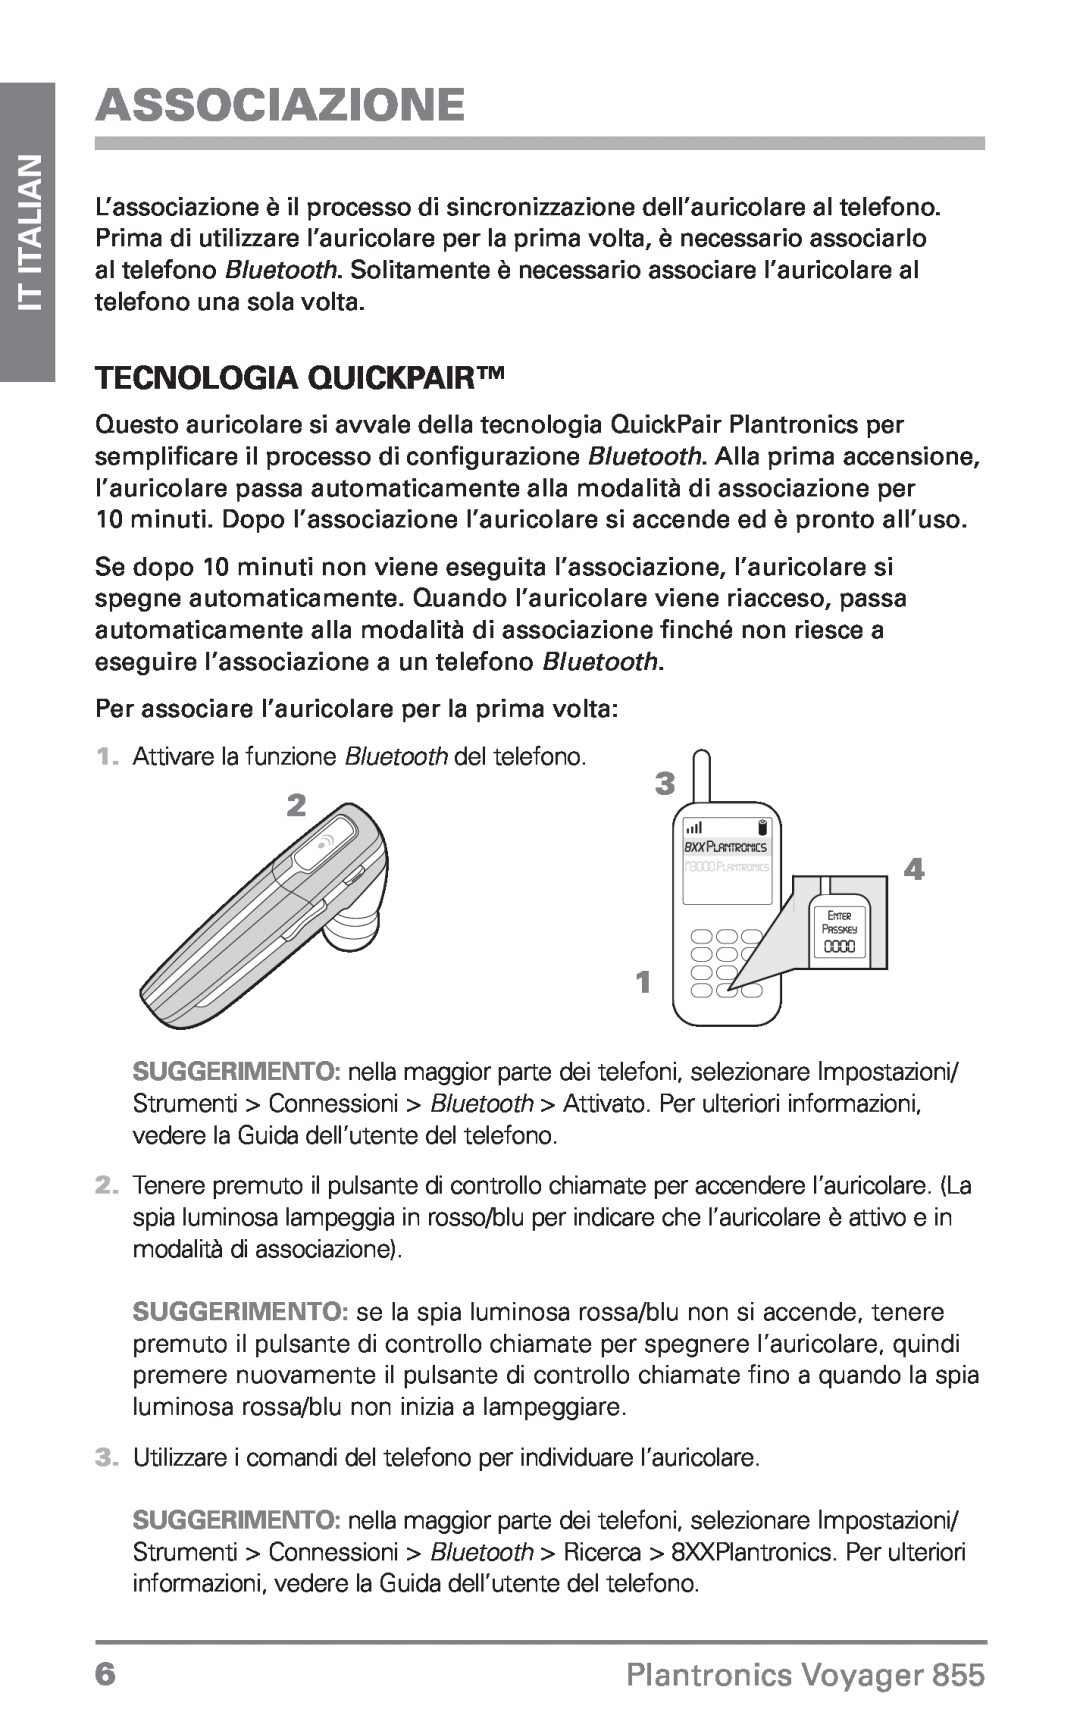 Plantronics Voyager 855 manual do utilizador Associazione, Tecnologia QuickPair, IT Italian, Plantronics Voyager 